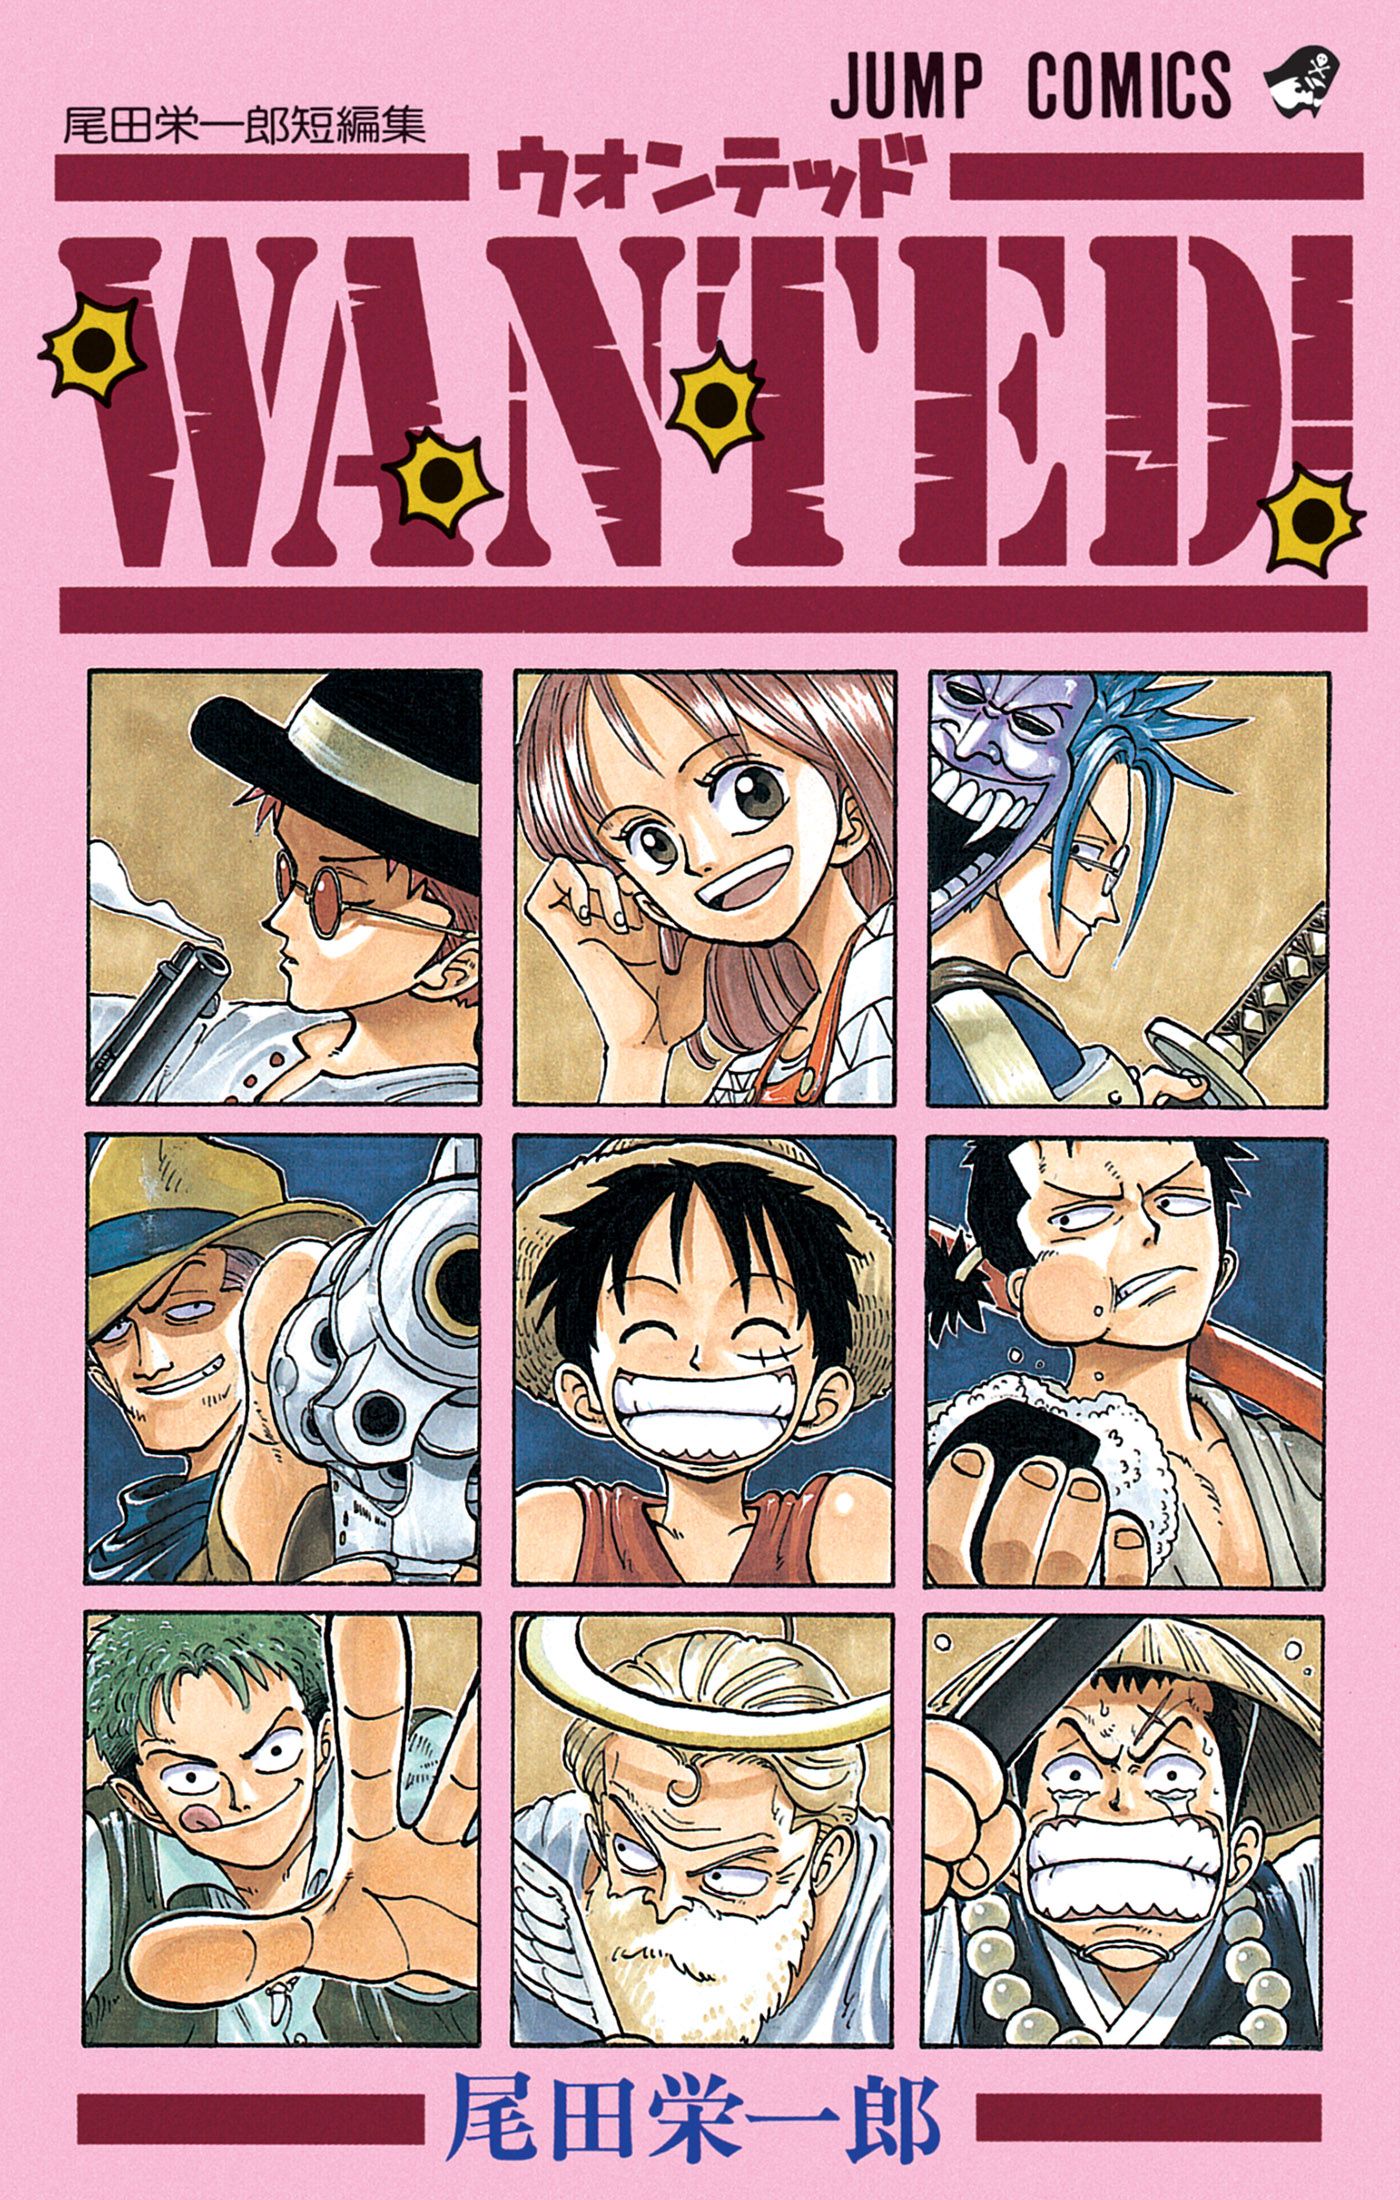 Wanted! Eiichiro Oda Before One Piece Manga image count 0